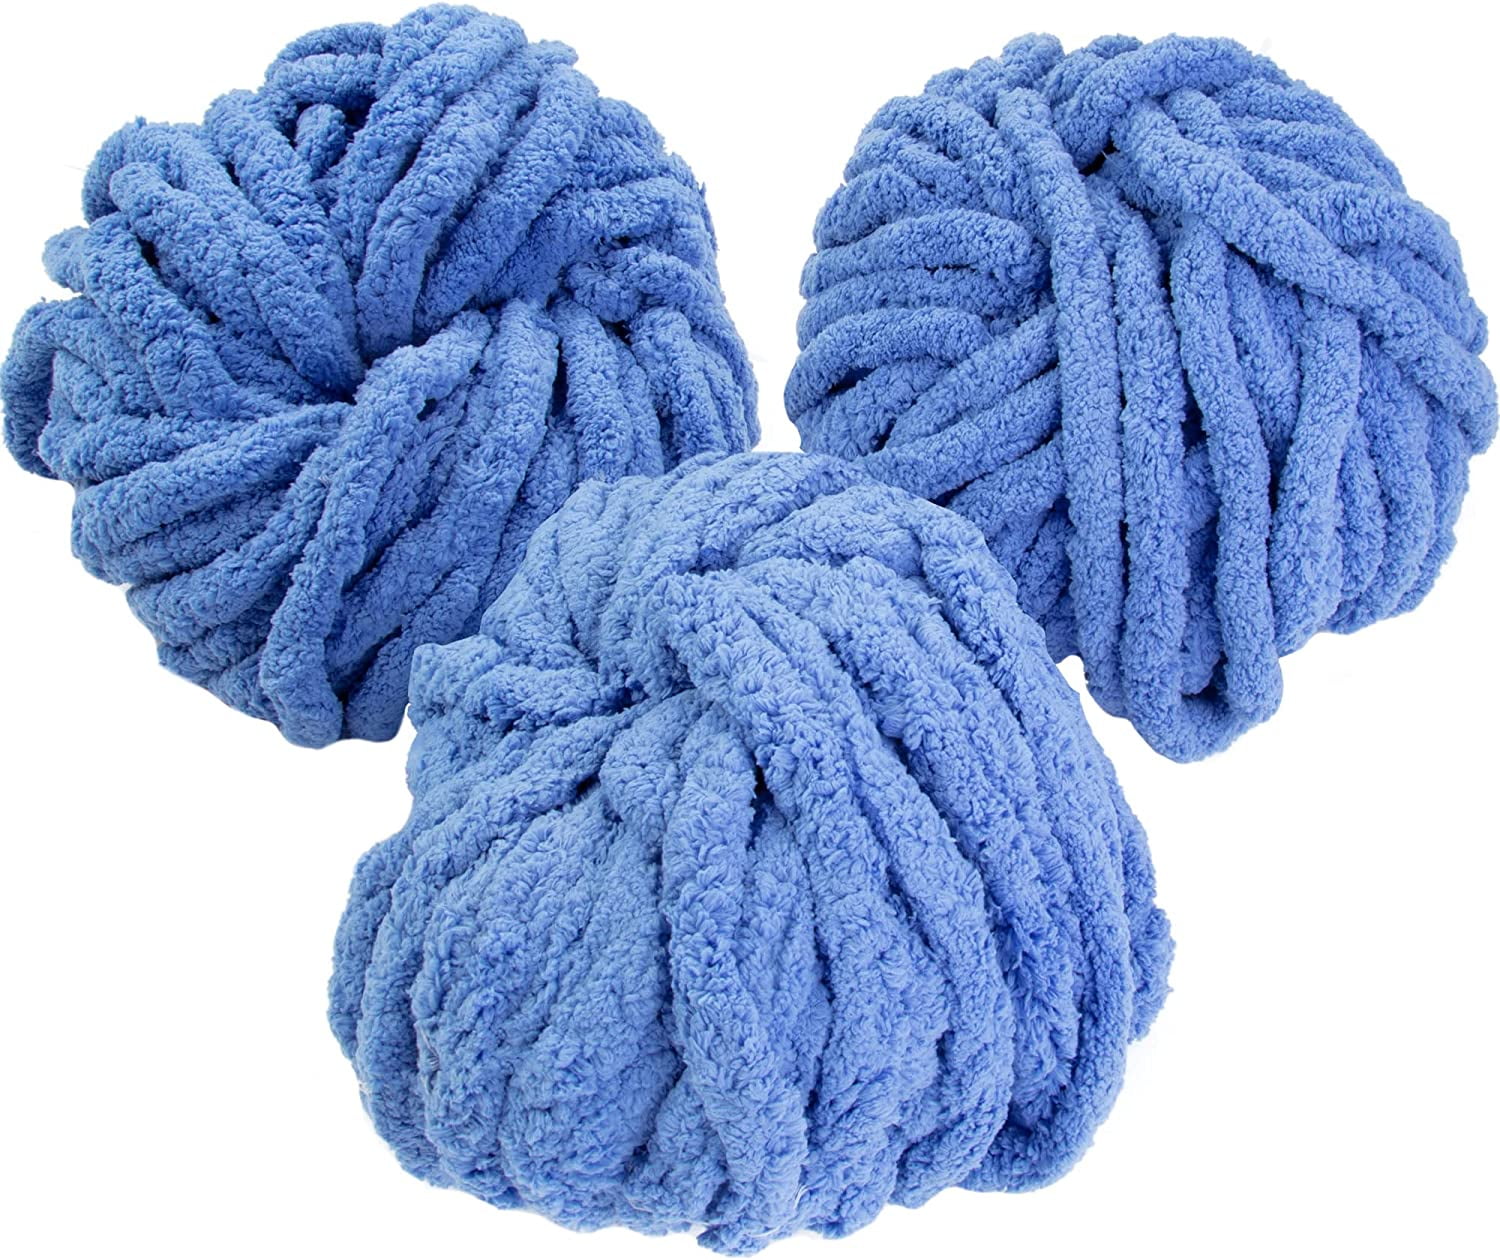 Idiy Chunky Yarn 3 Pack (24 Yards Each Skein) Indigo Blue Fluffy Chenille Yarn Perfect for Soft Throw and Baby Blankets, Arm